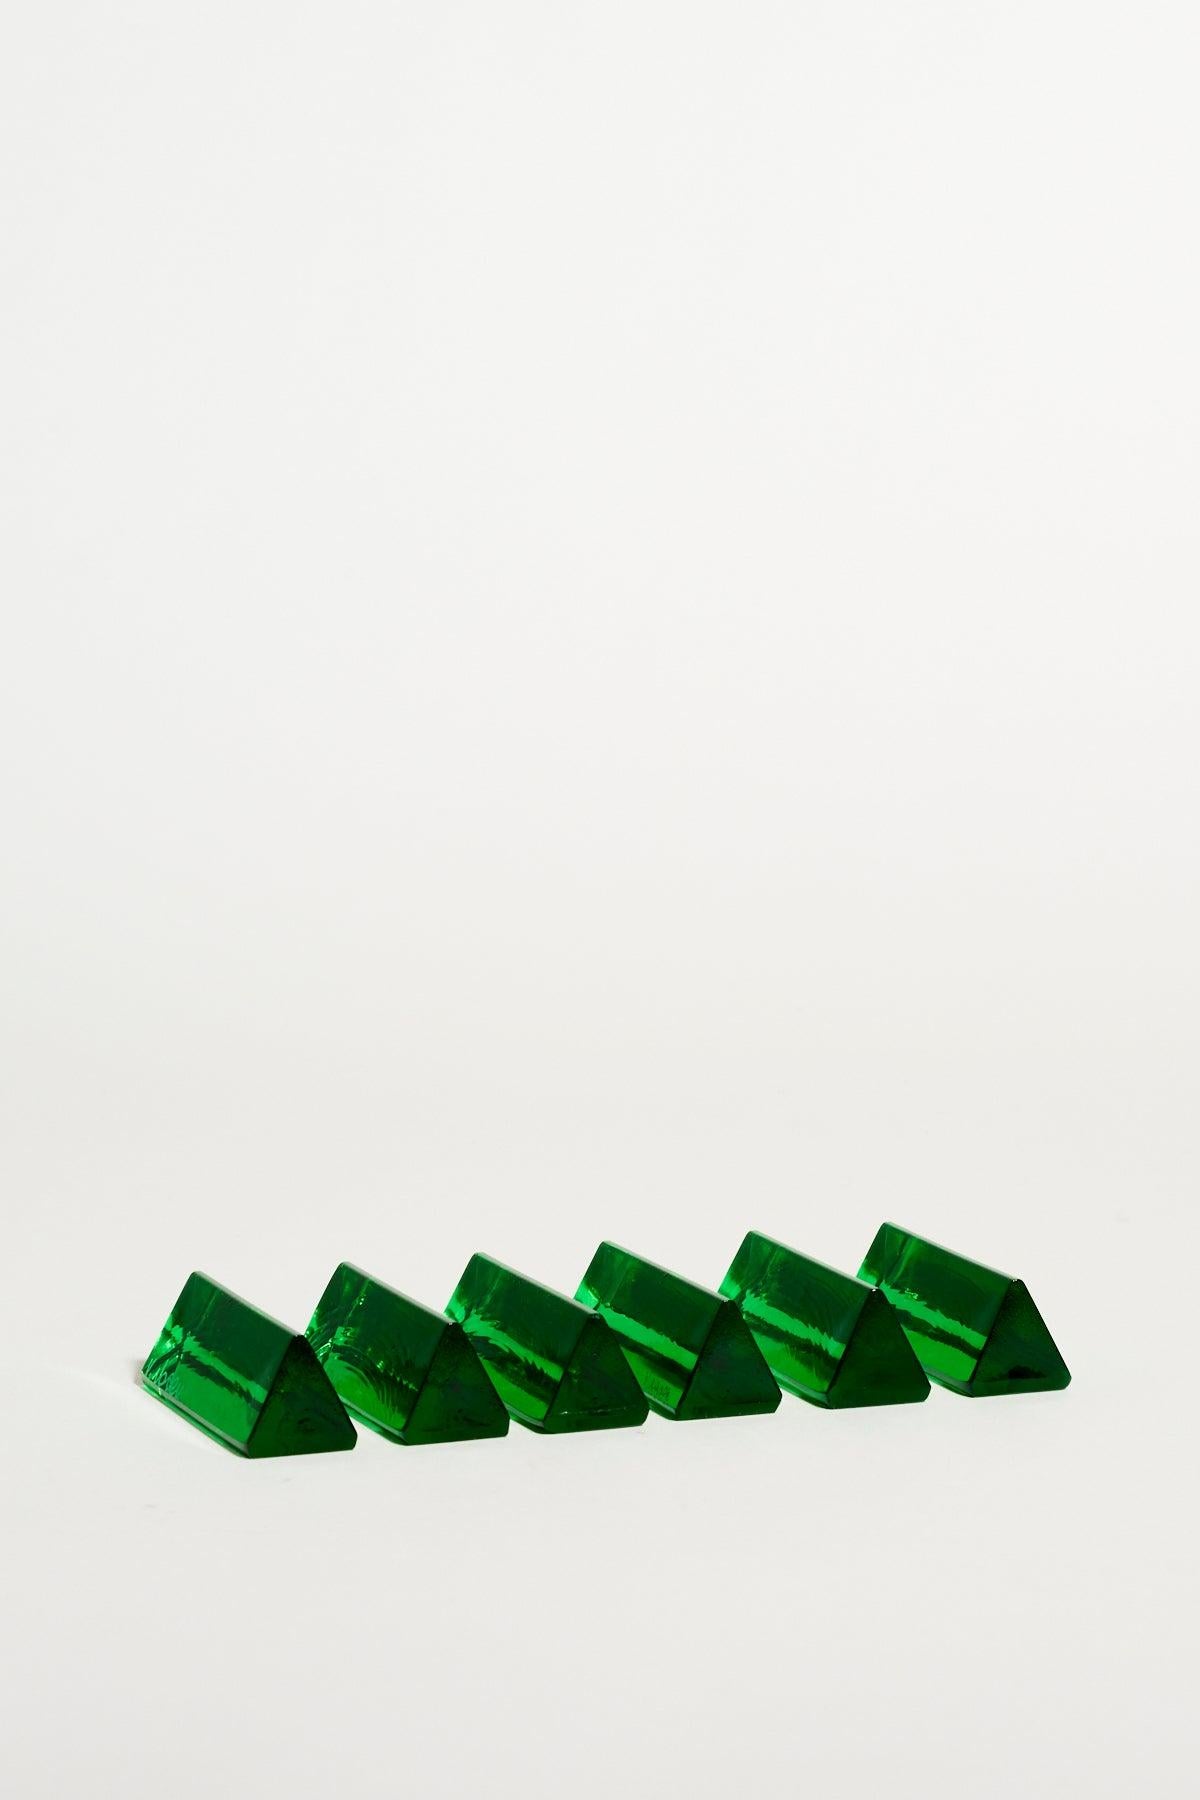 Italian Green Murano Knife Rests, Set of Six